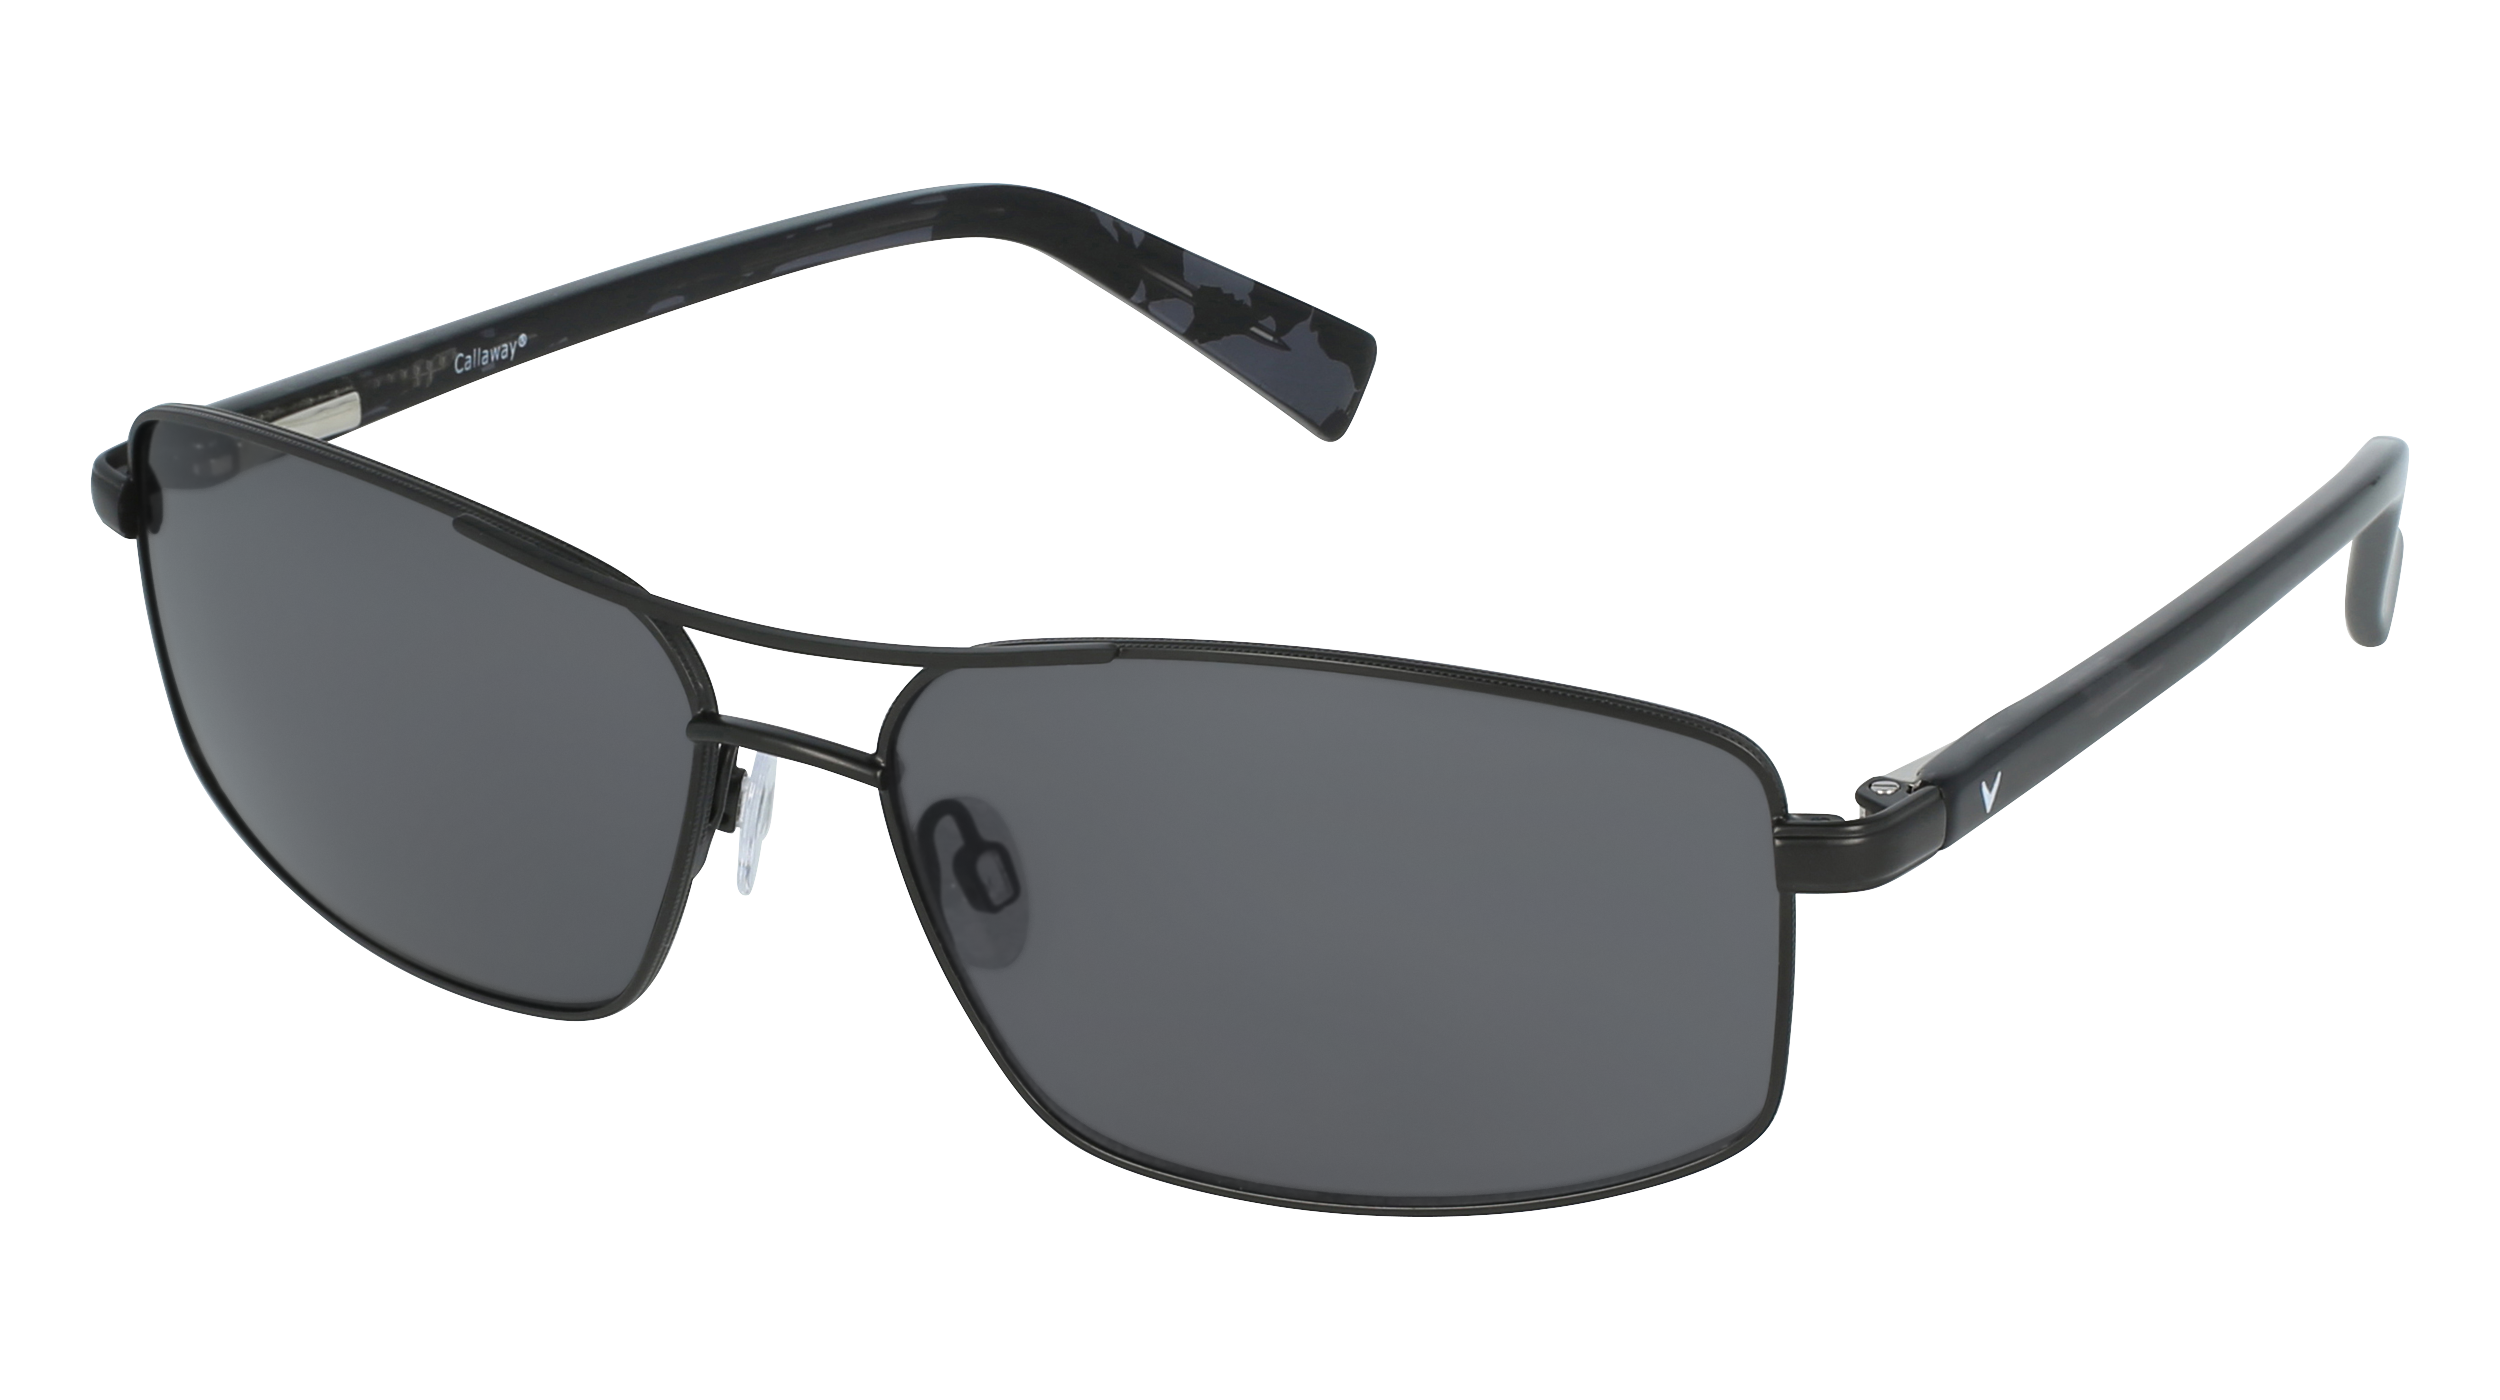 Callaway C 08 Black Men's Sunglasses | JCPenney Optical